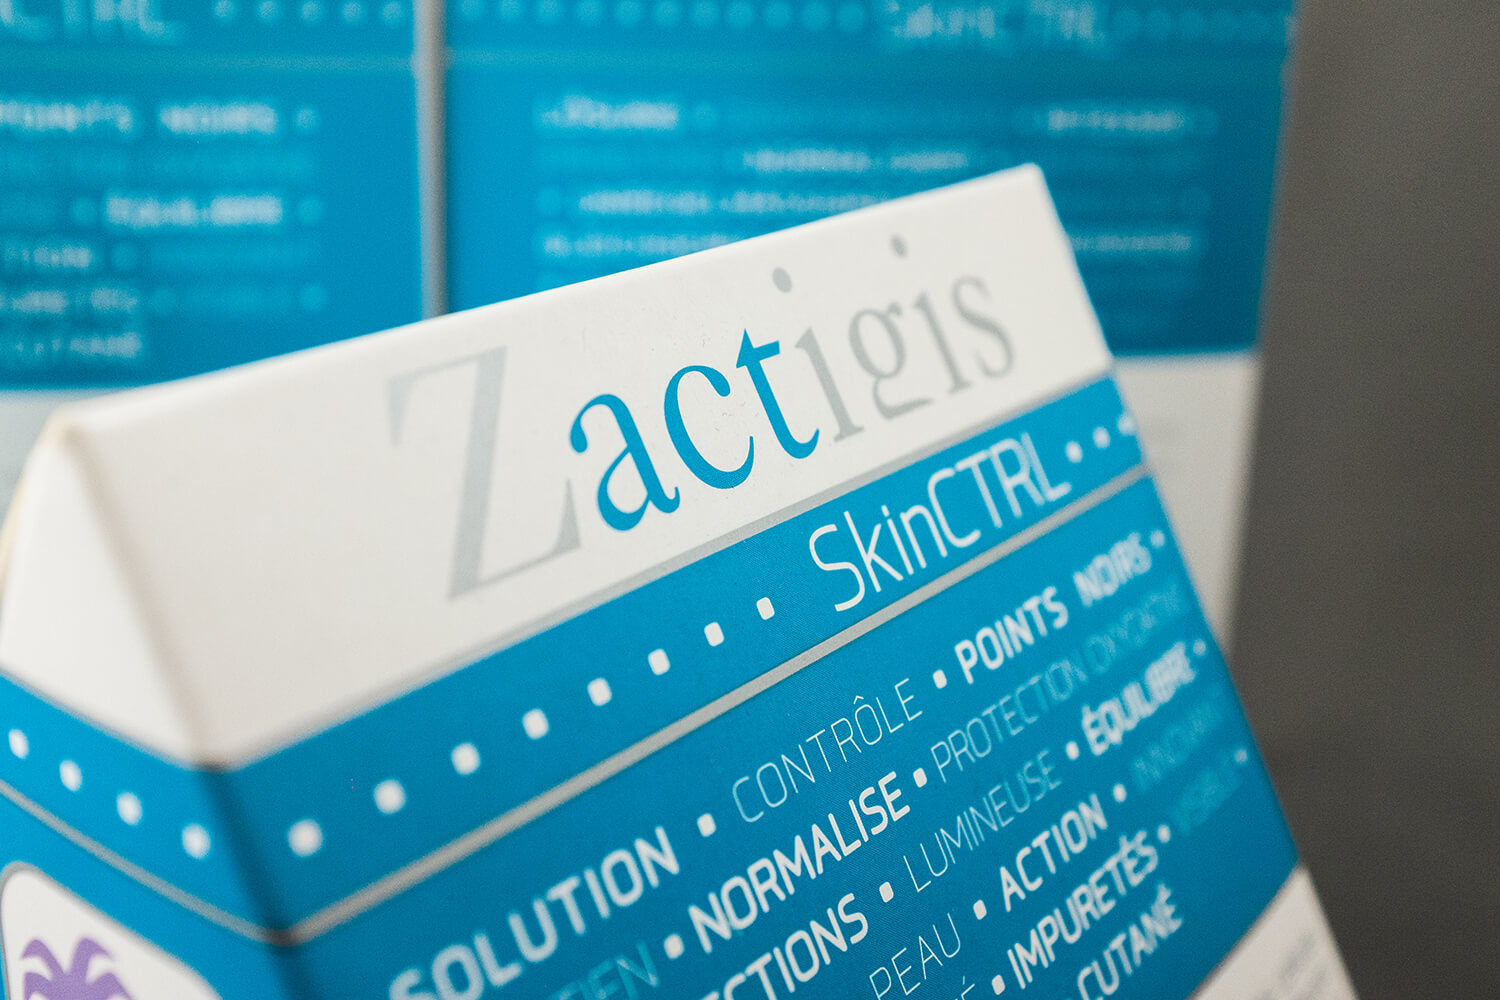 Zactigis SkinCTRL – Packshot